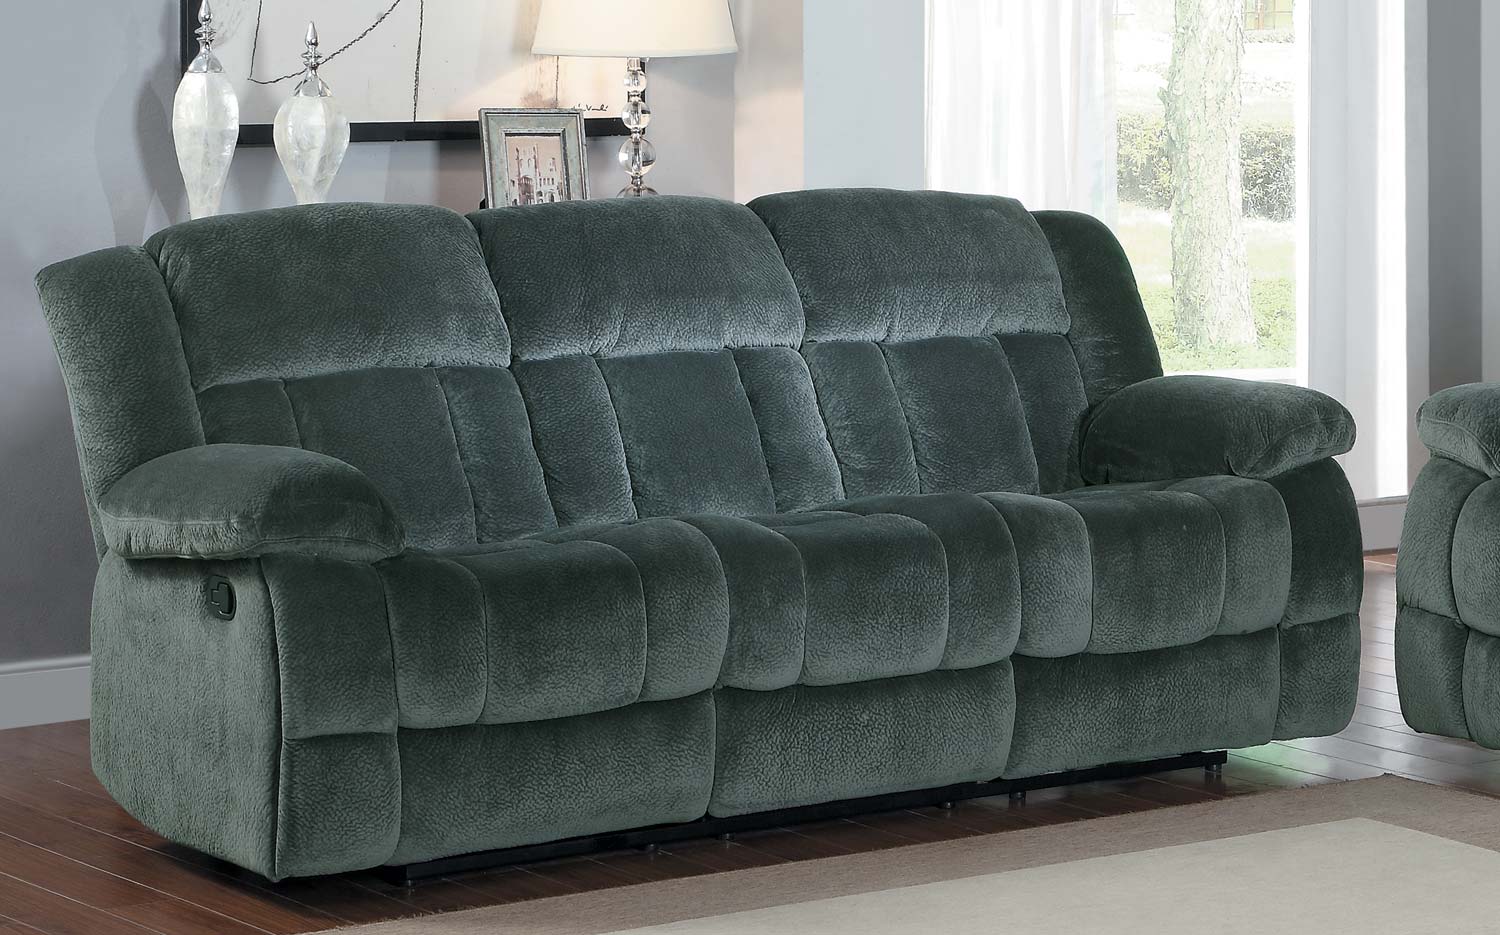 Homelegance Laurelton Double Reclining Sofa - Charcoal - Textured Plush Microfiber